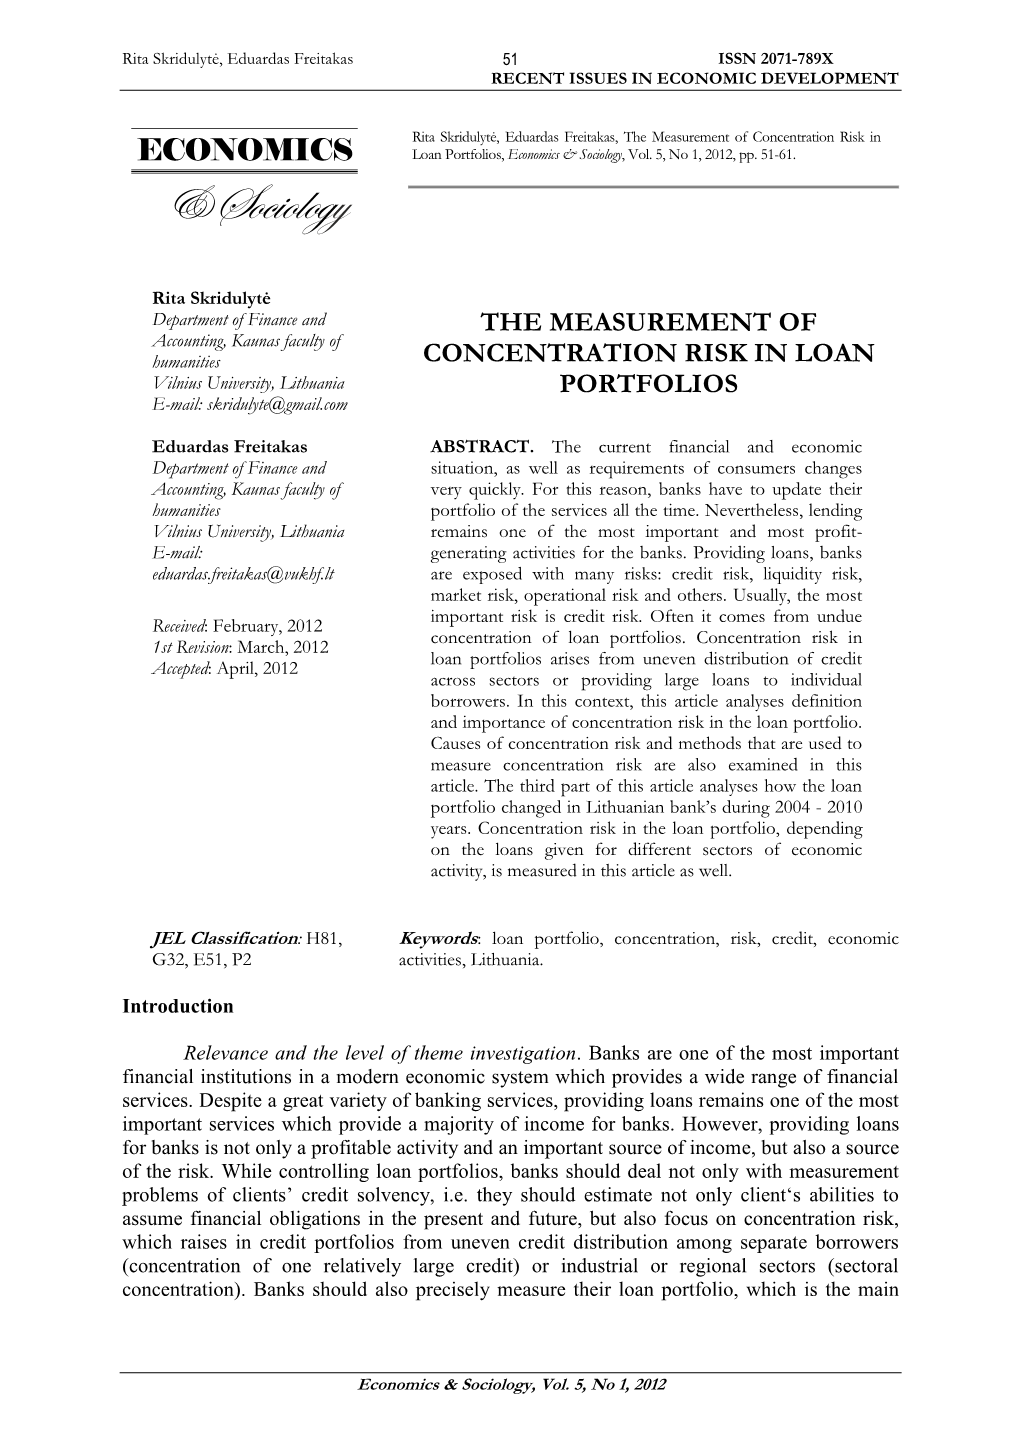 The Measurement of Concentration Risk in Loan Portfolios, Economics & Sociology, Vol